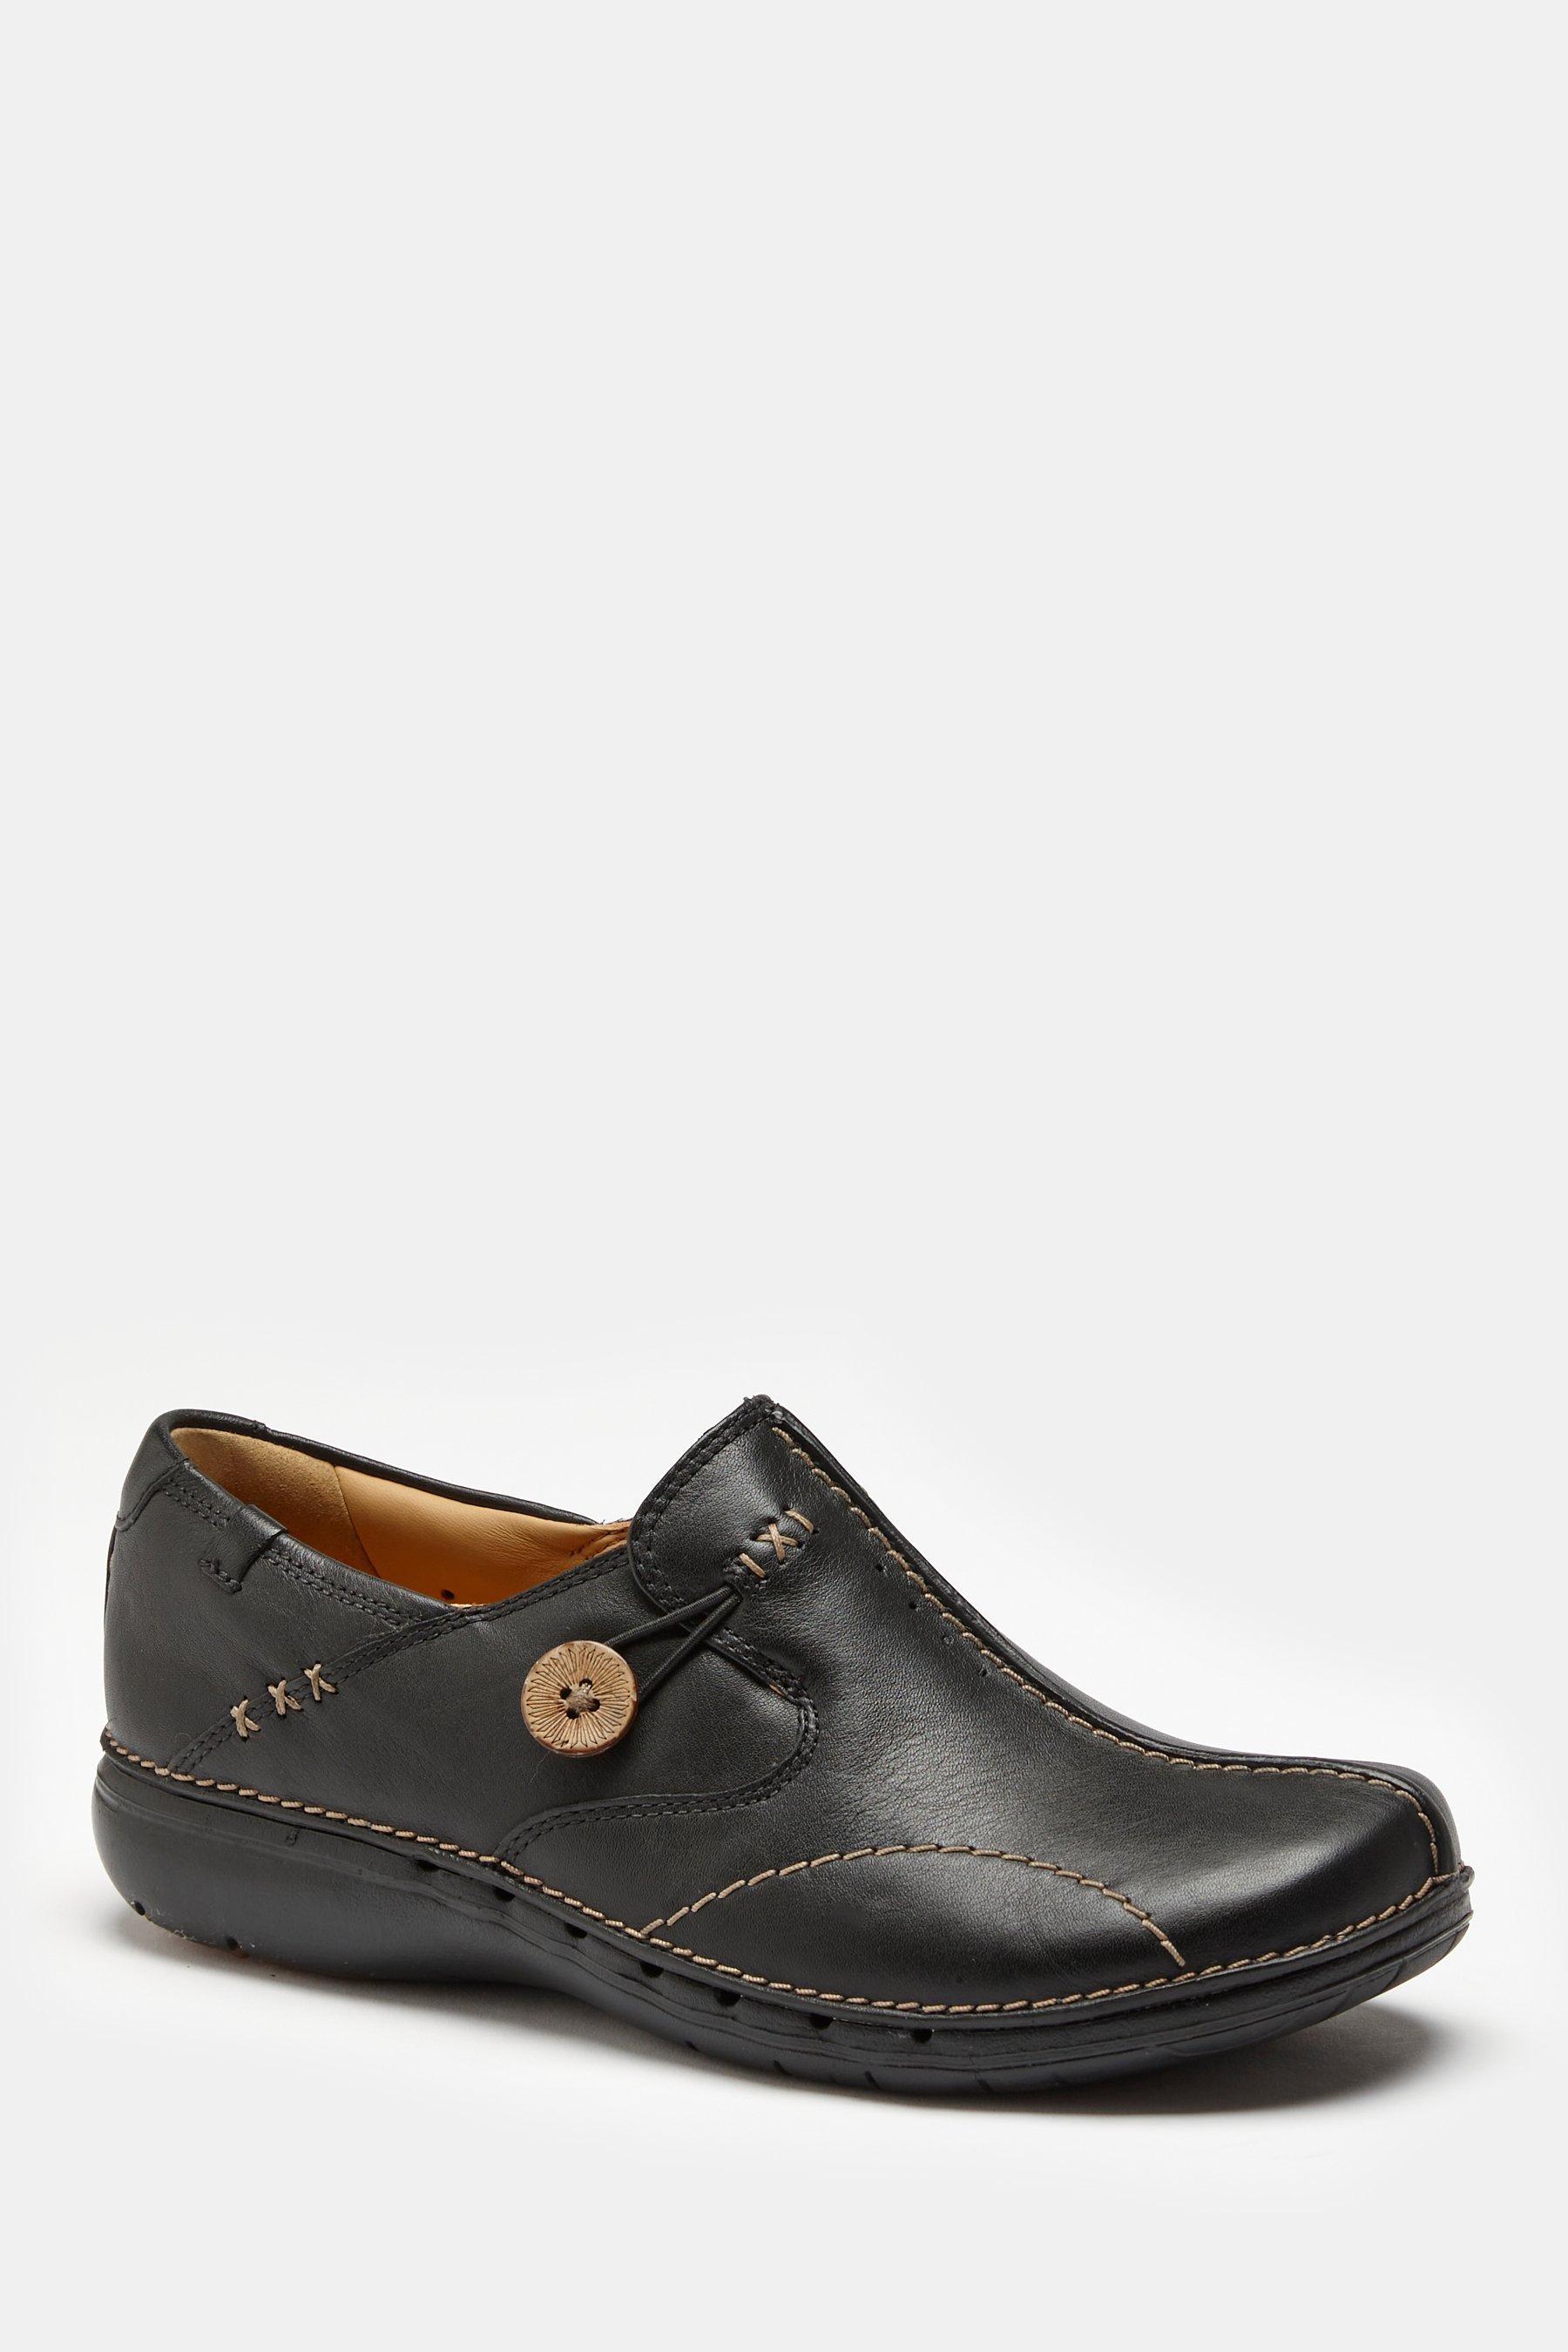 clarks black wide fit unloop shoes - womens - size: 4